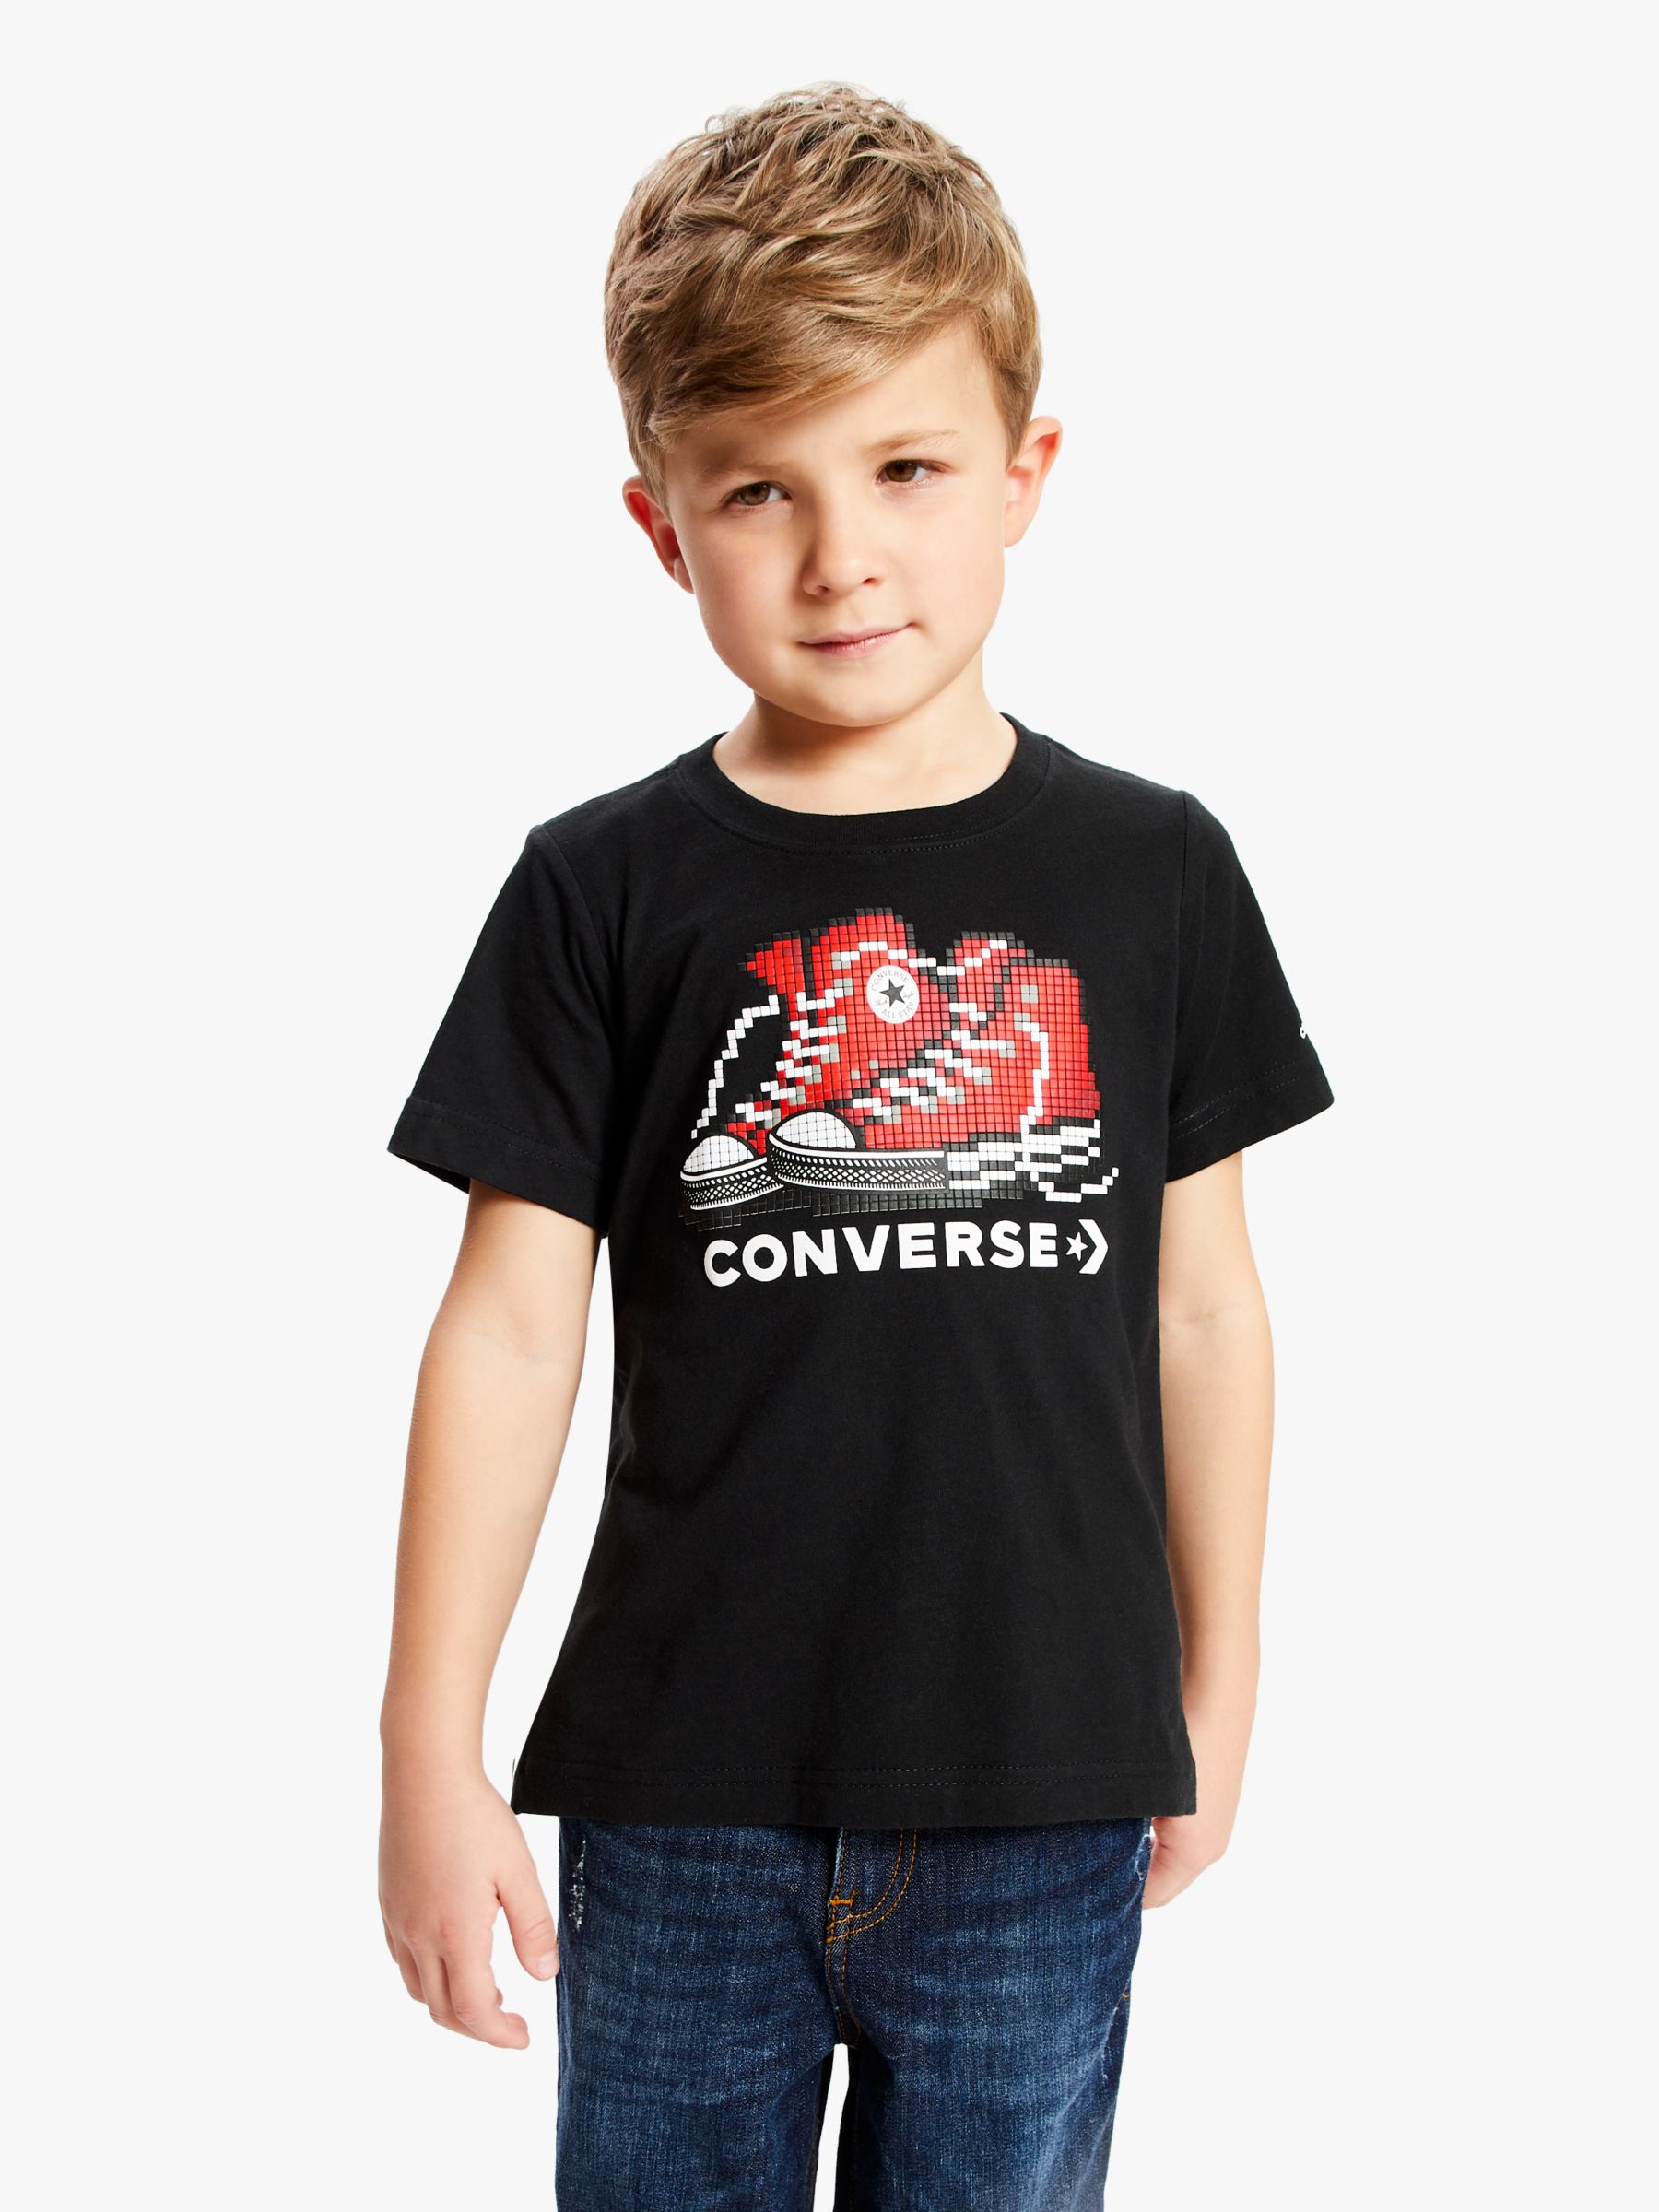 boys converse shirts 